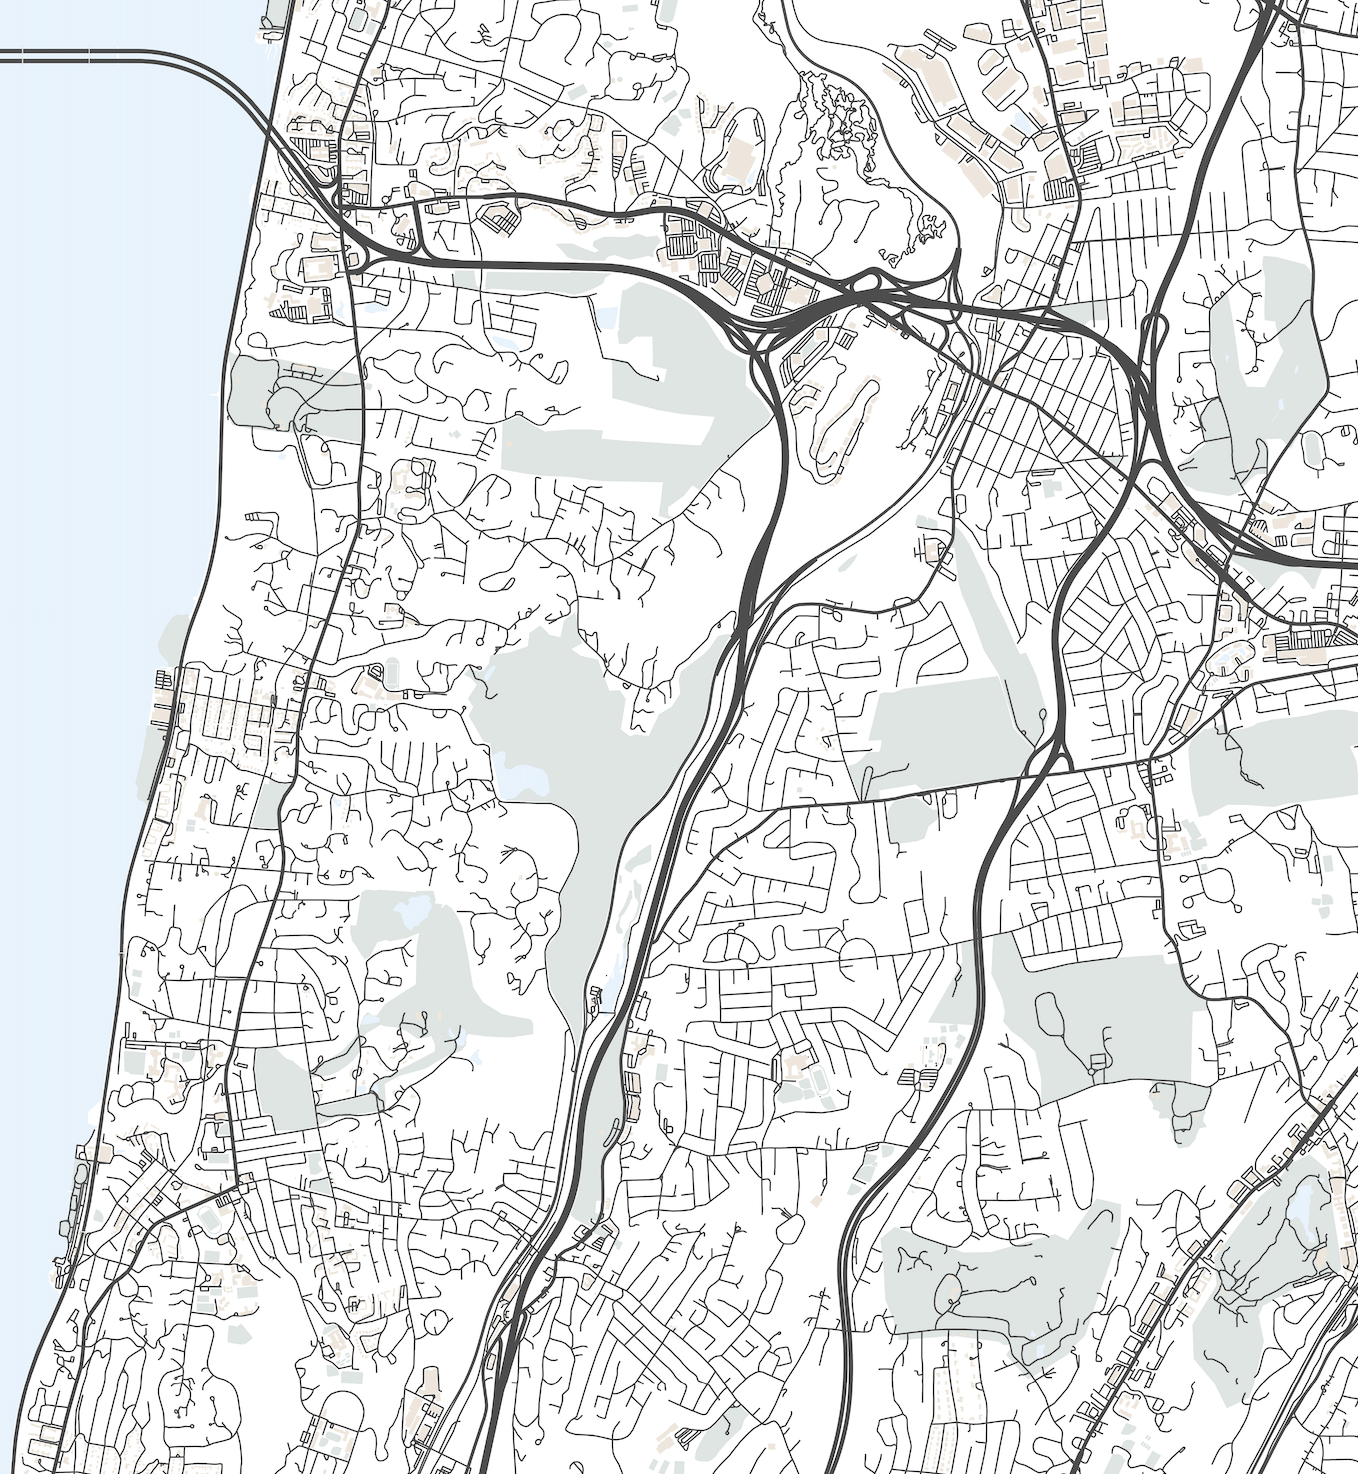 Greenburgh Map Print